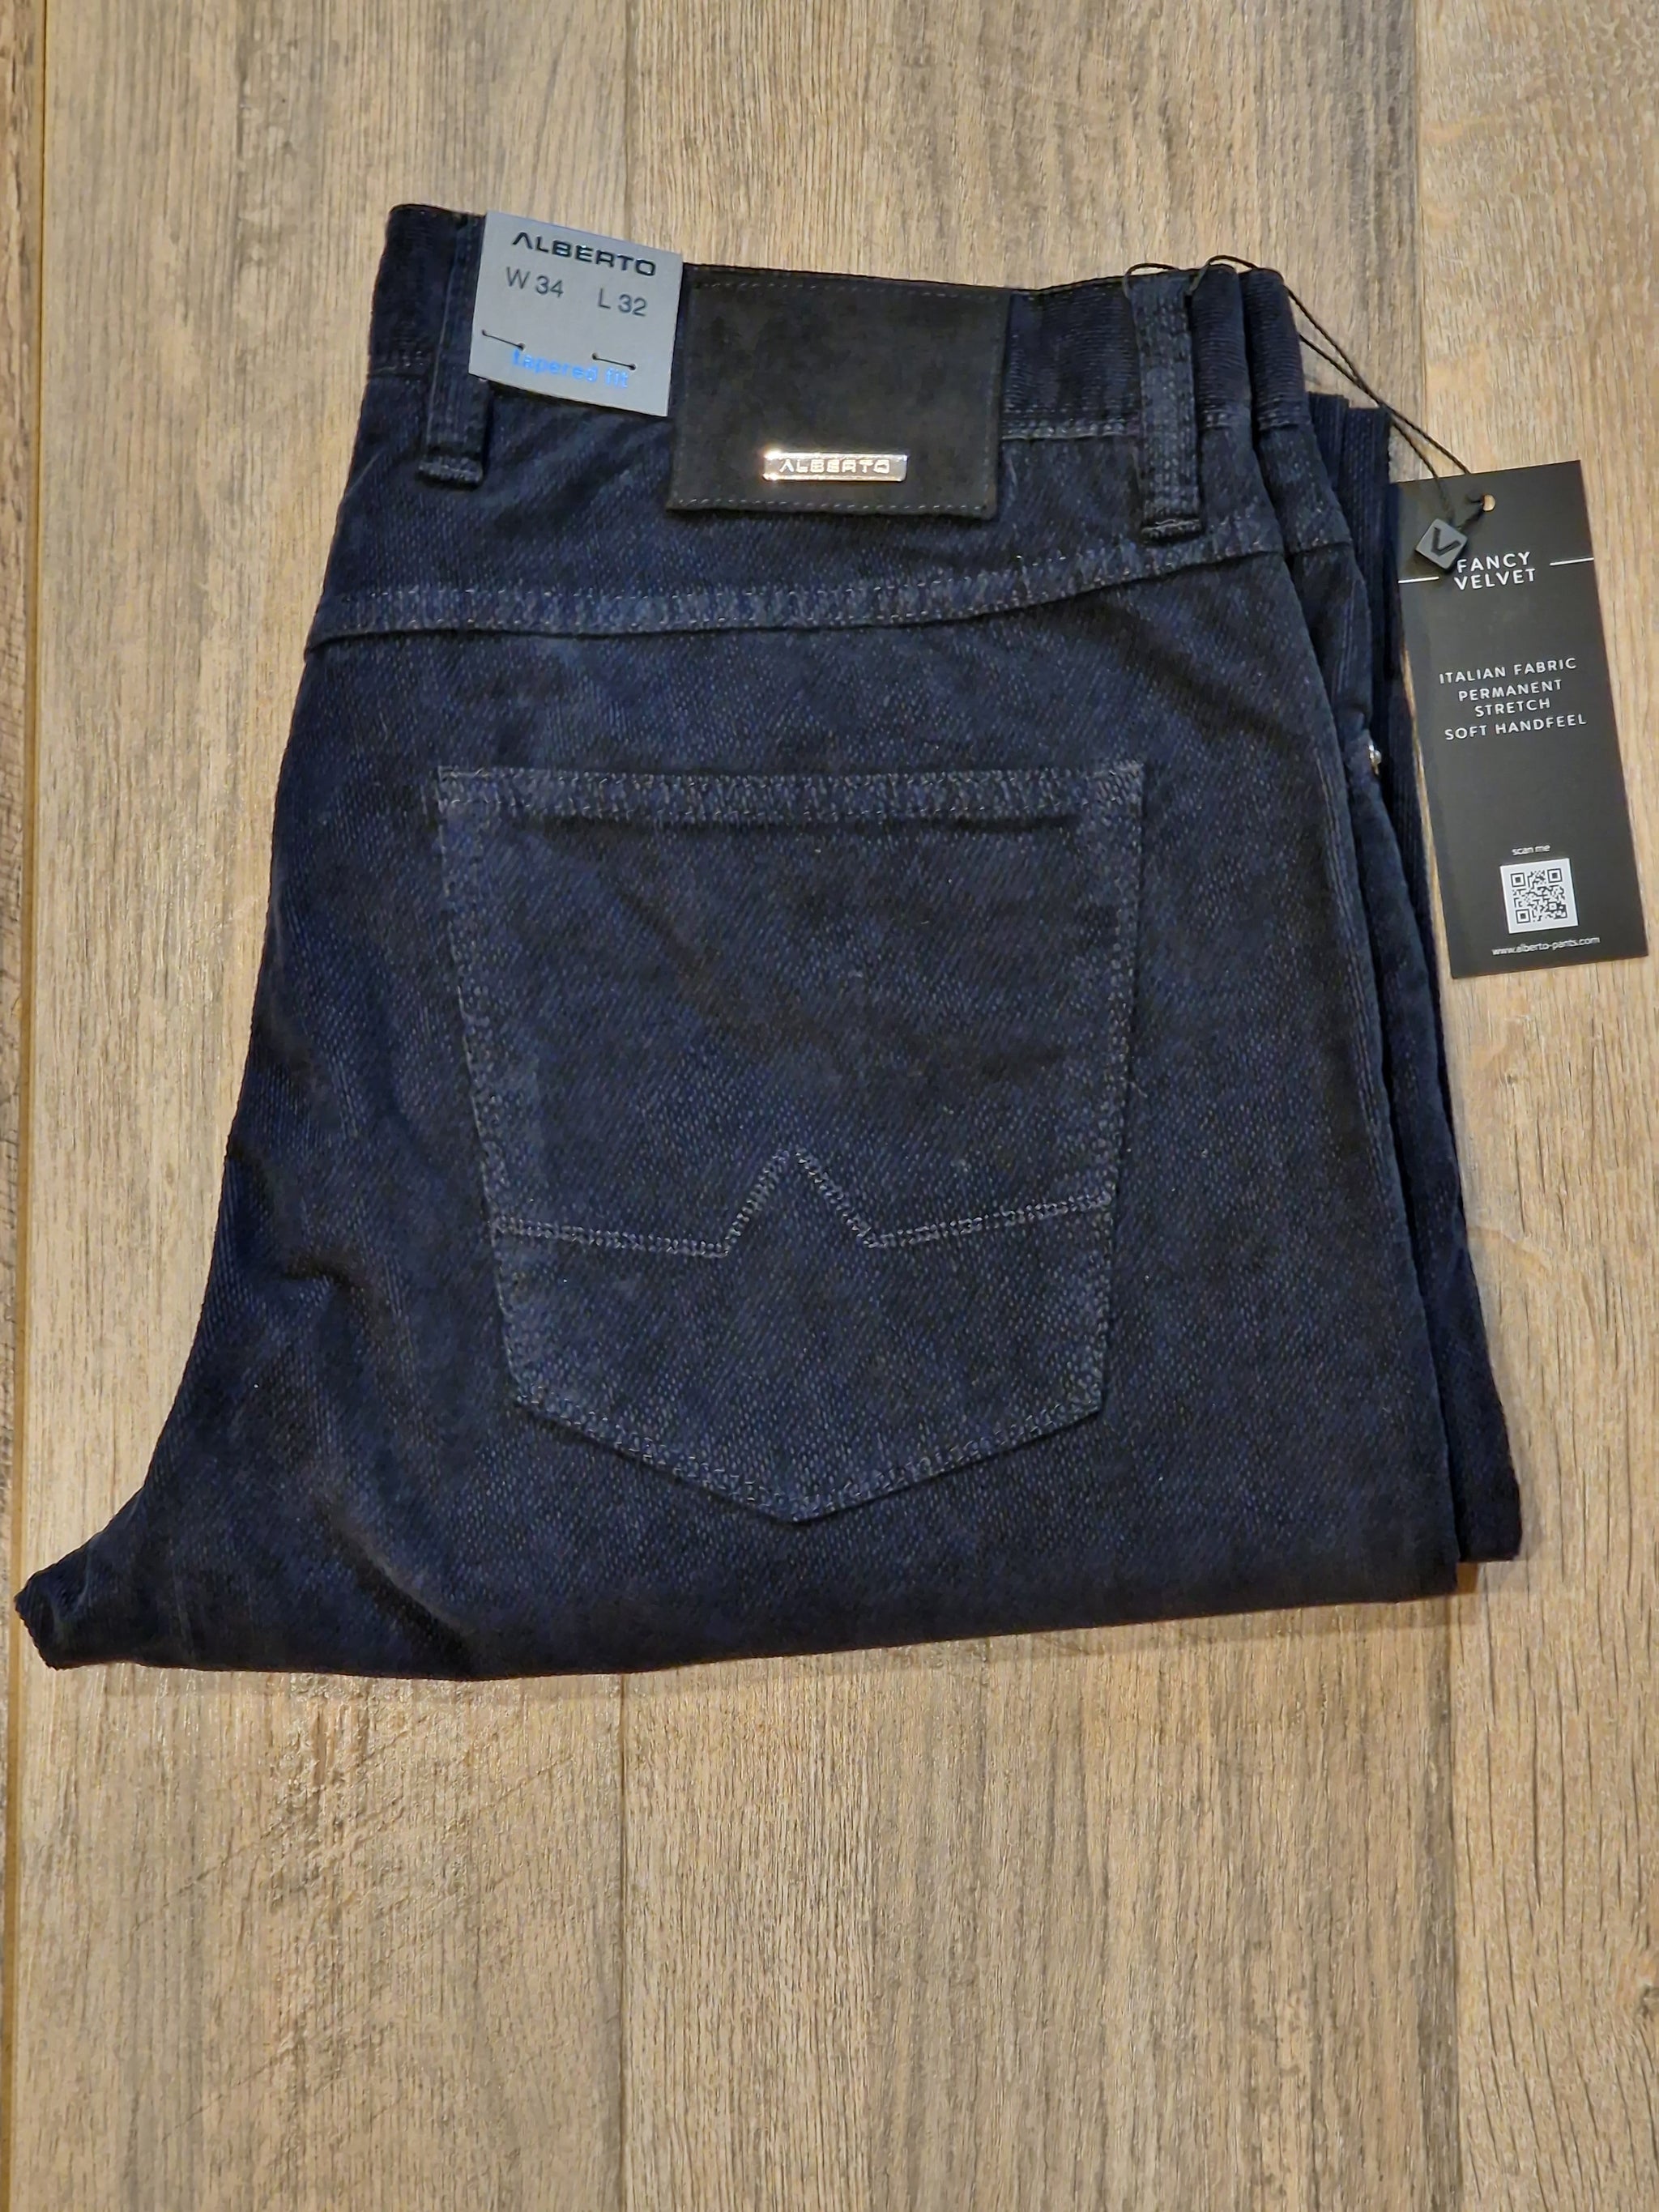 Alberto ROBIN Tapered fit - FANCY VELVET 5 Pocket Jean